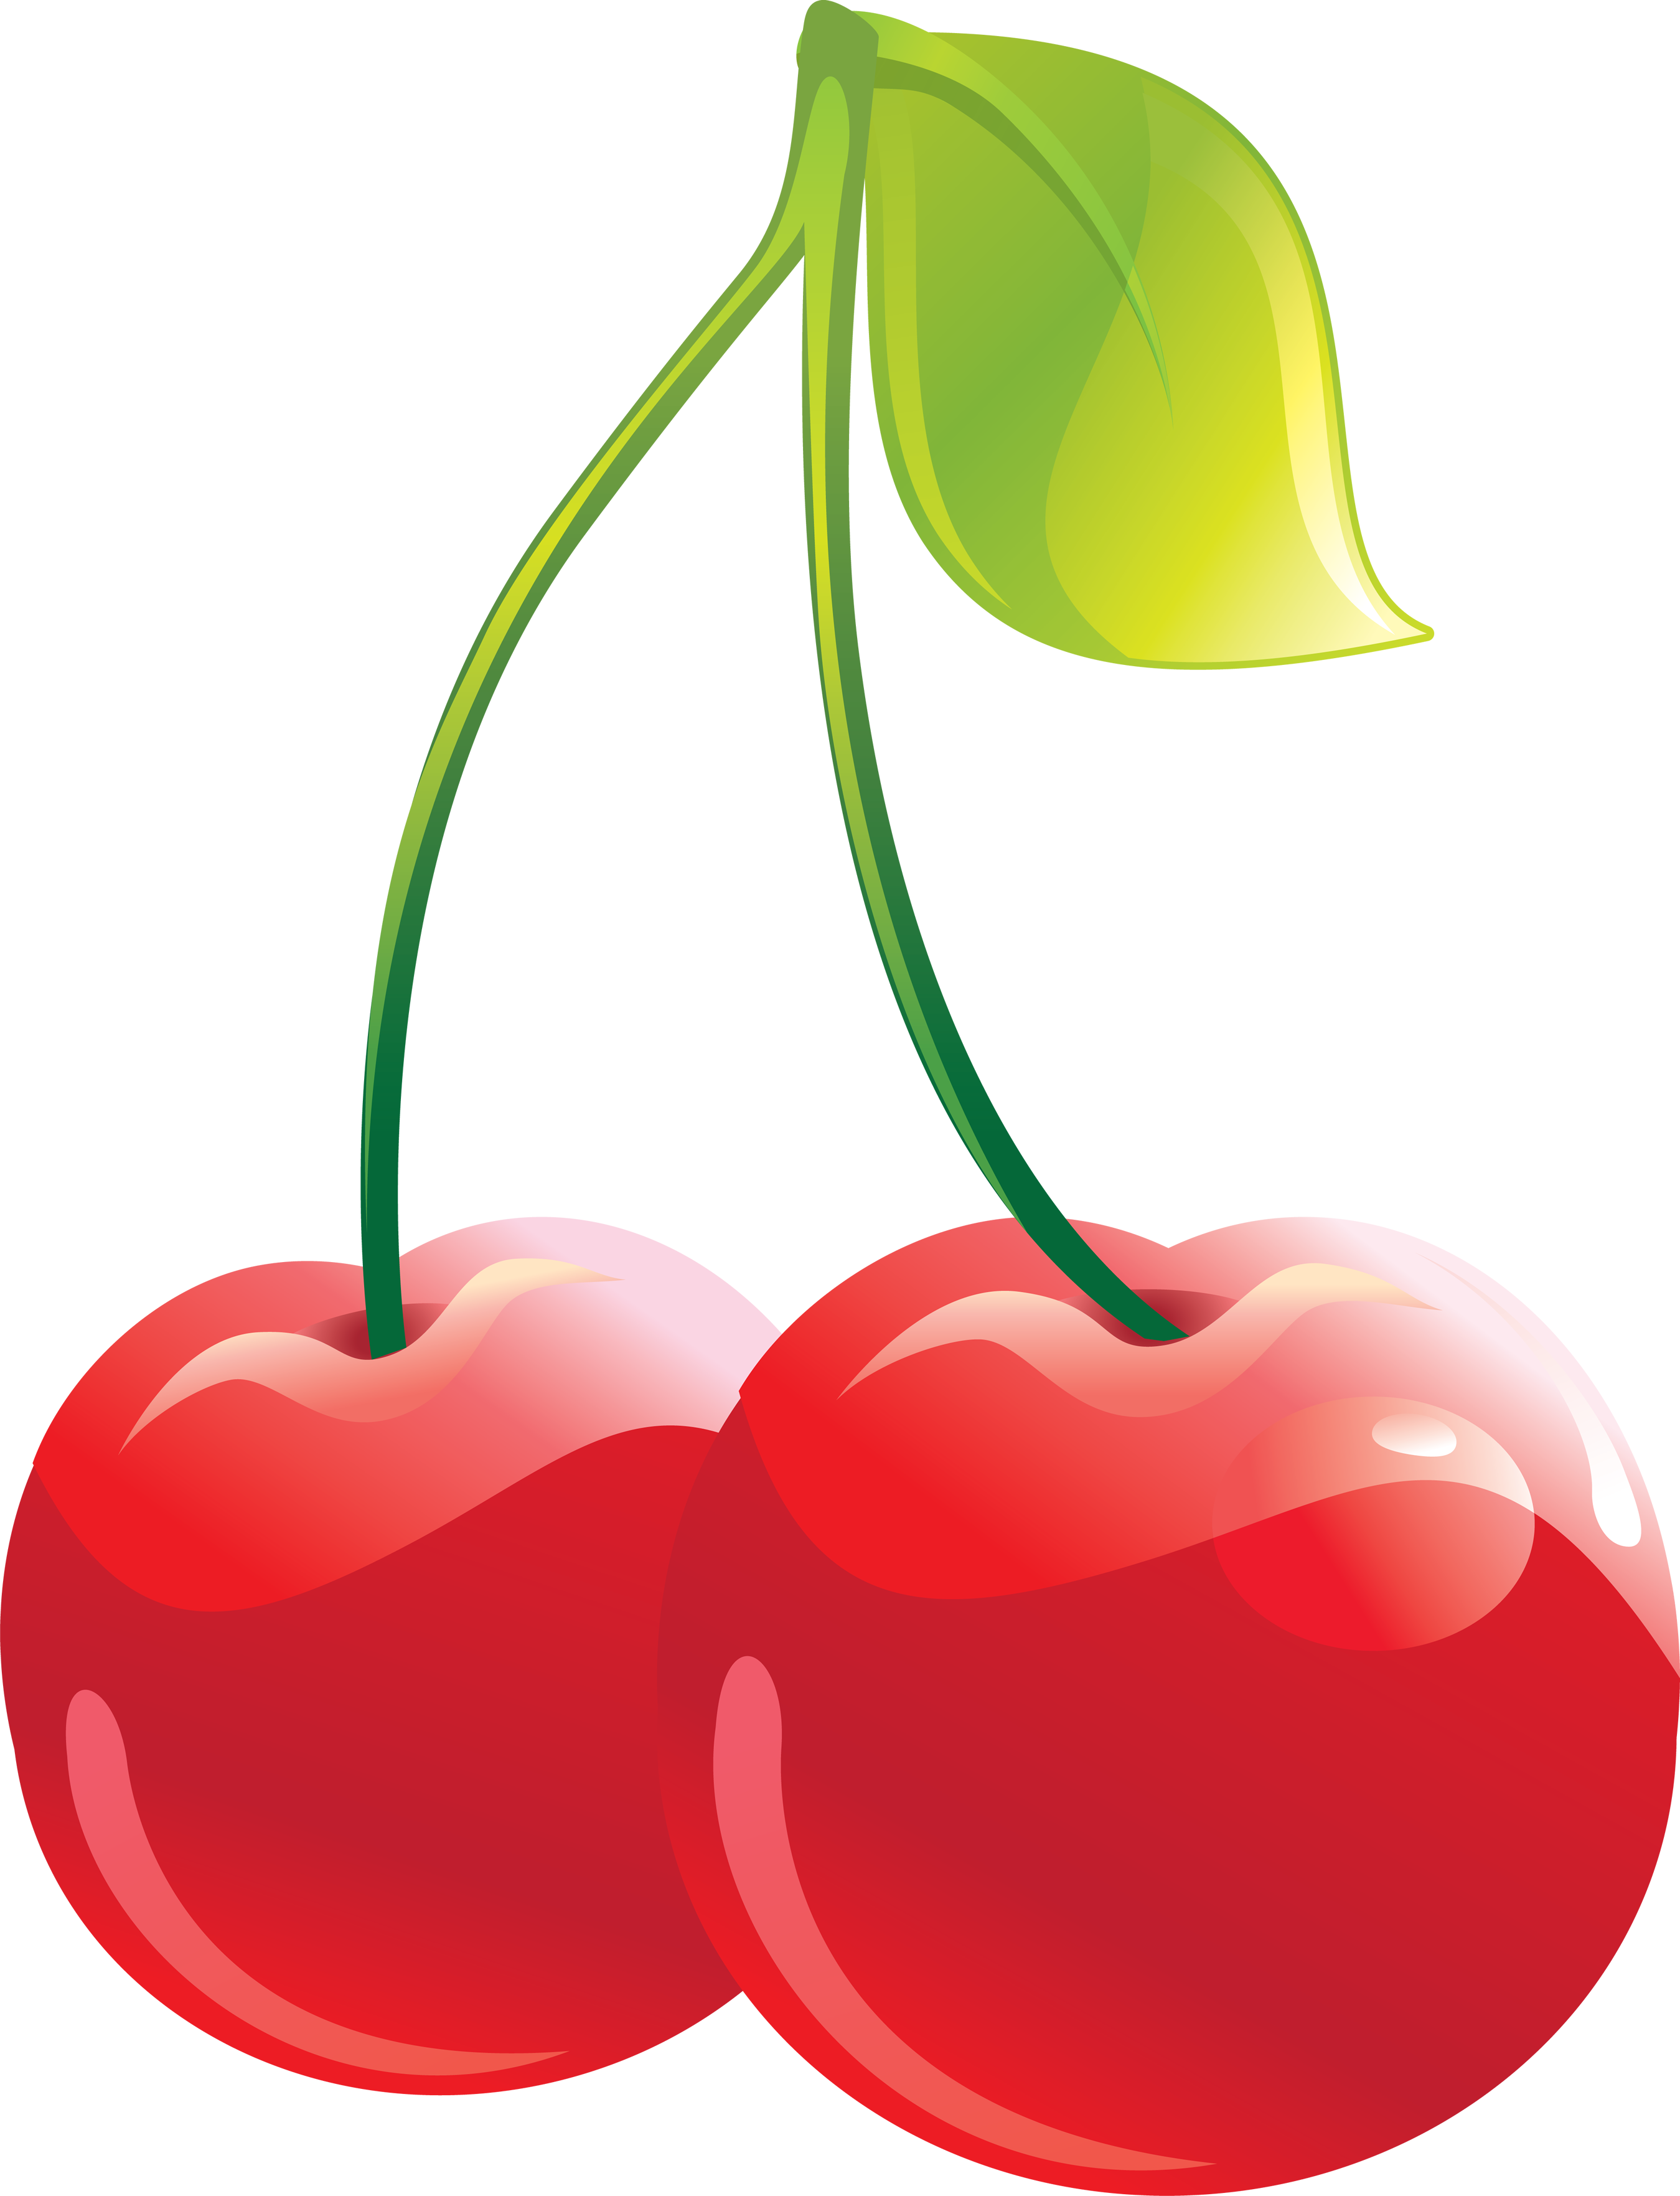 Cherries PNG Image